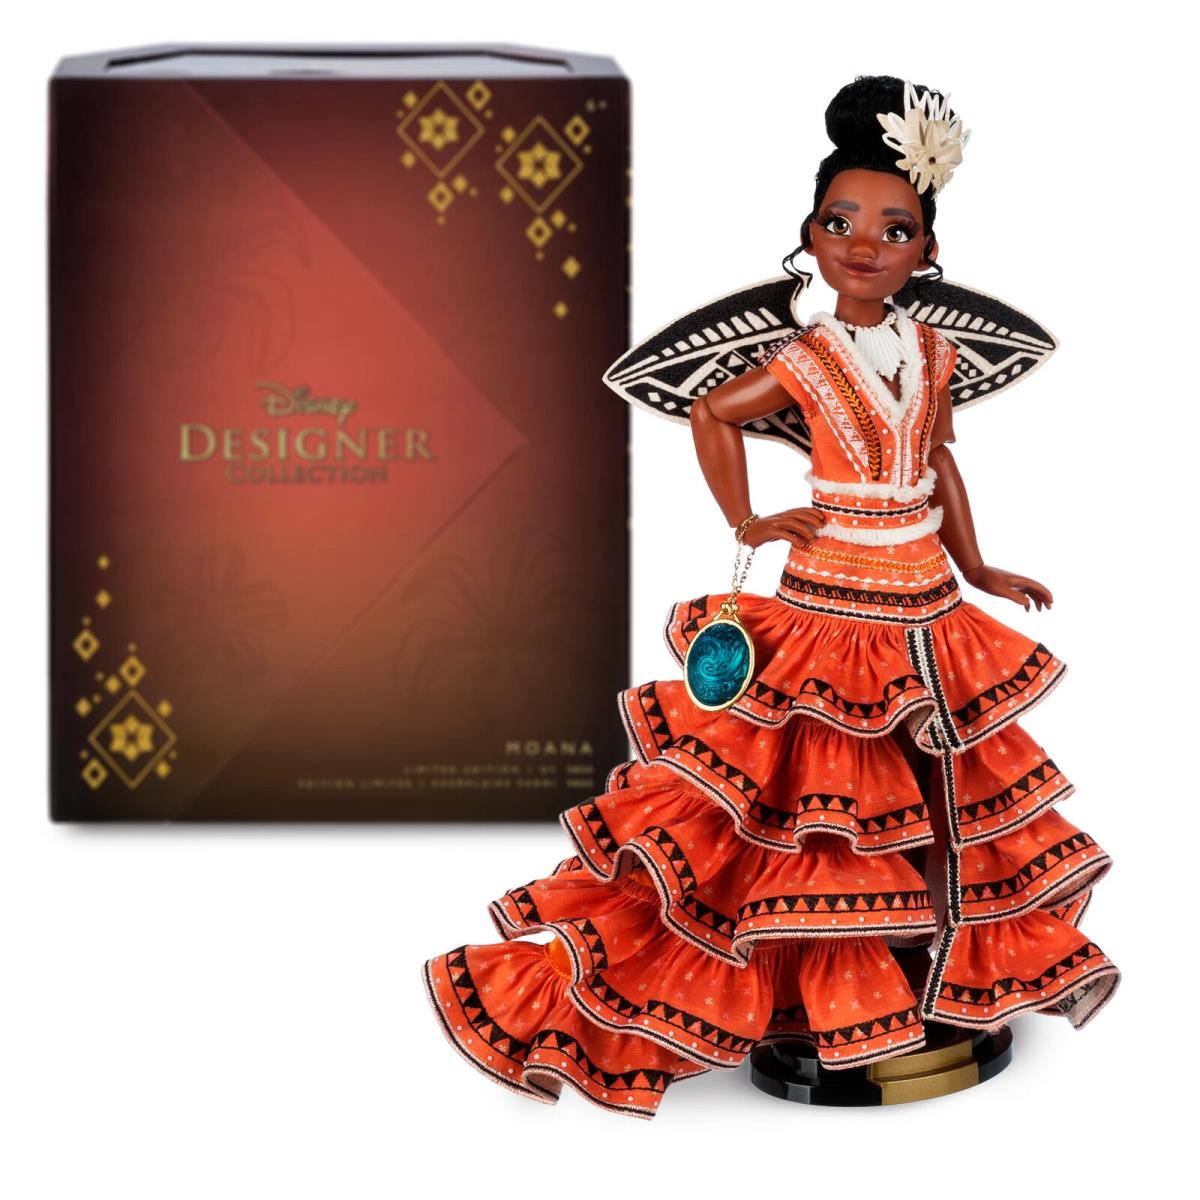 Moana Limited Edition Doll 11.75 Disney Designer Collection /9800 Mib Princess